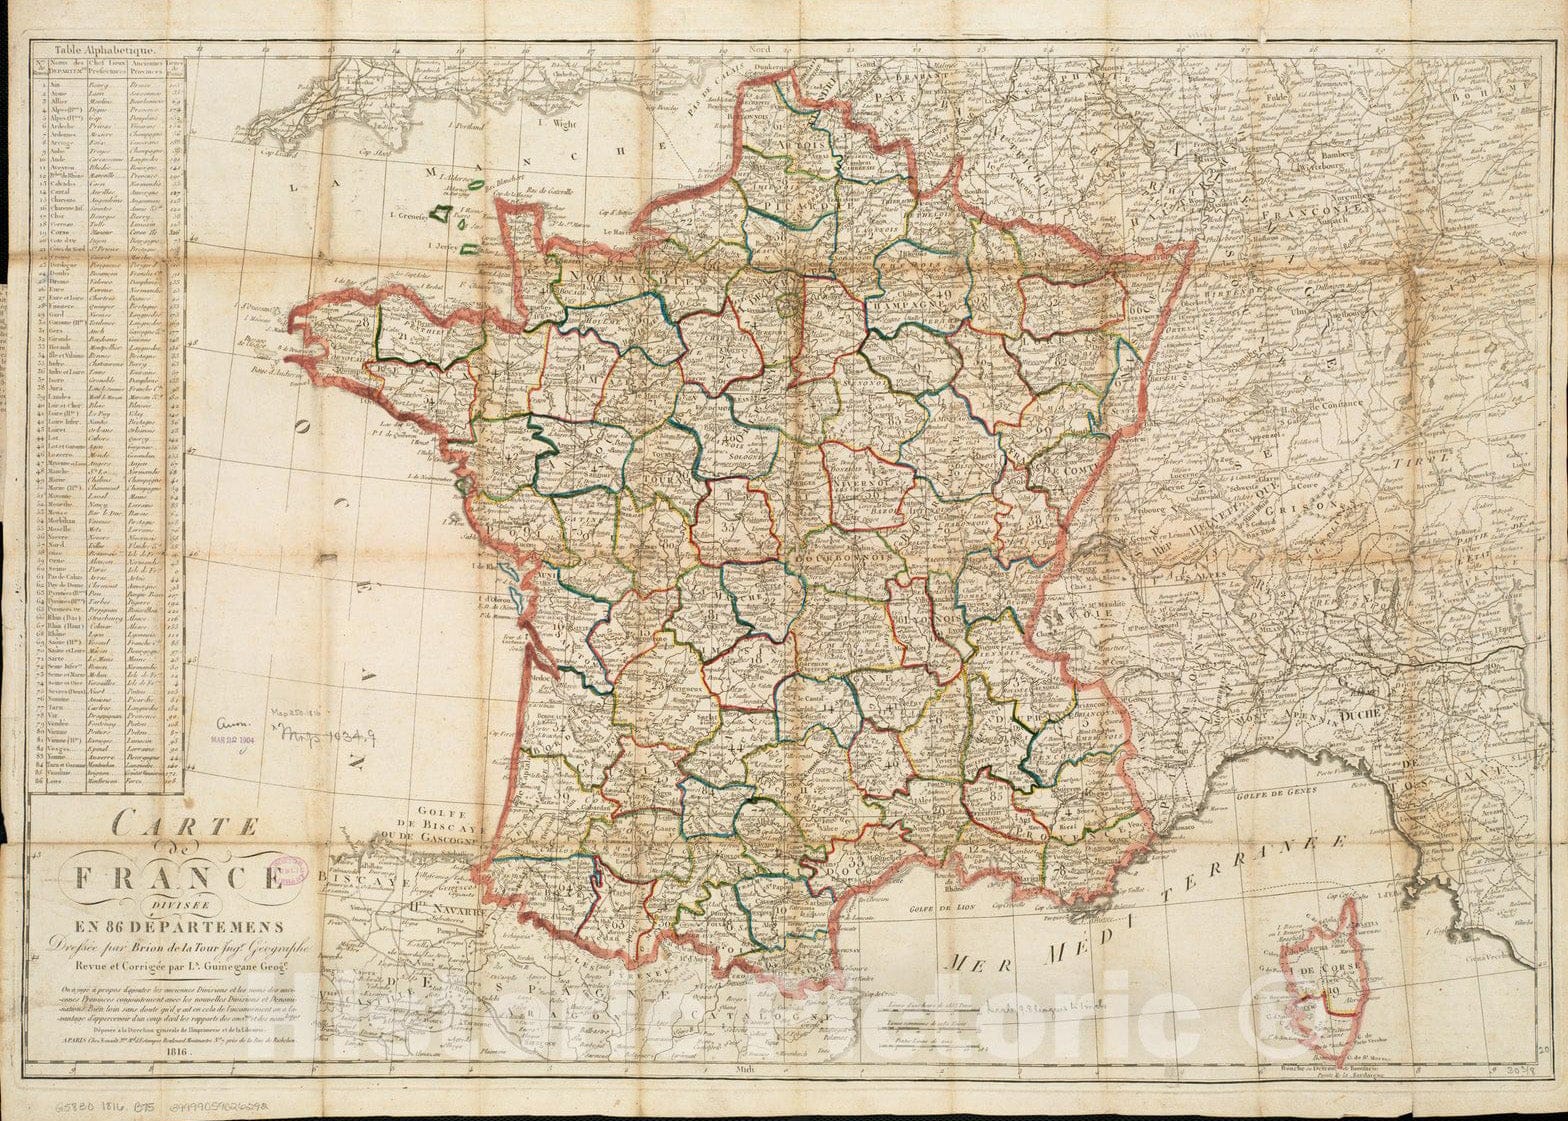 Historical Map, 1816 Carte de France divisee en 86 departemens, Vintage Wall Art